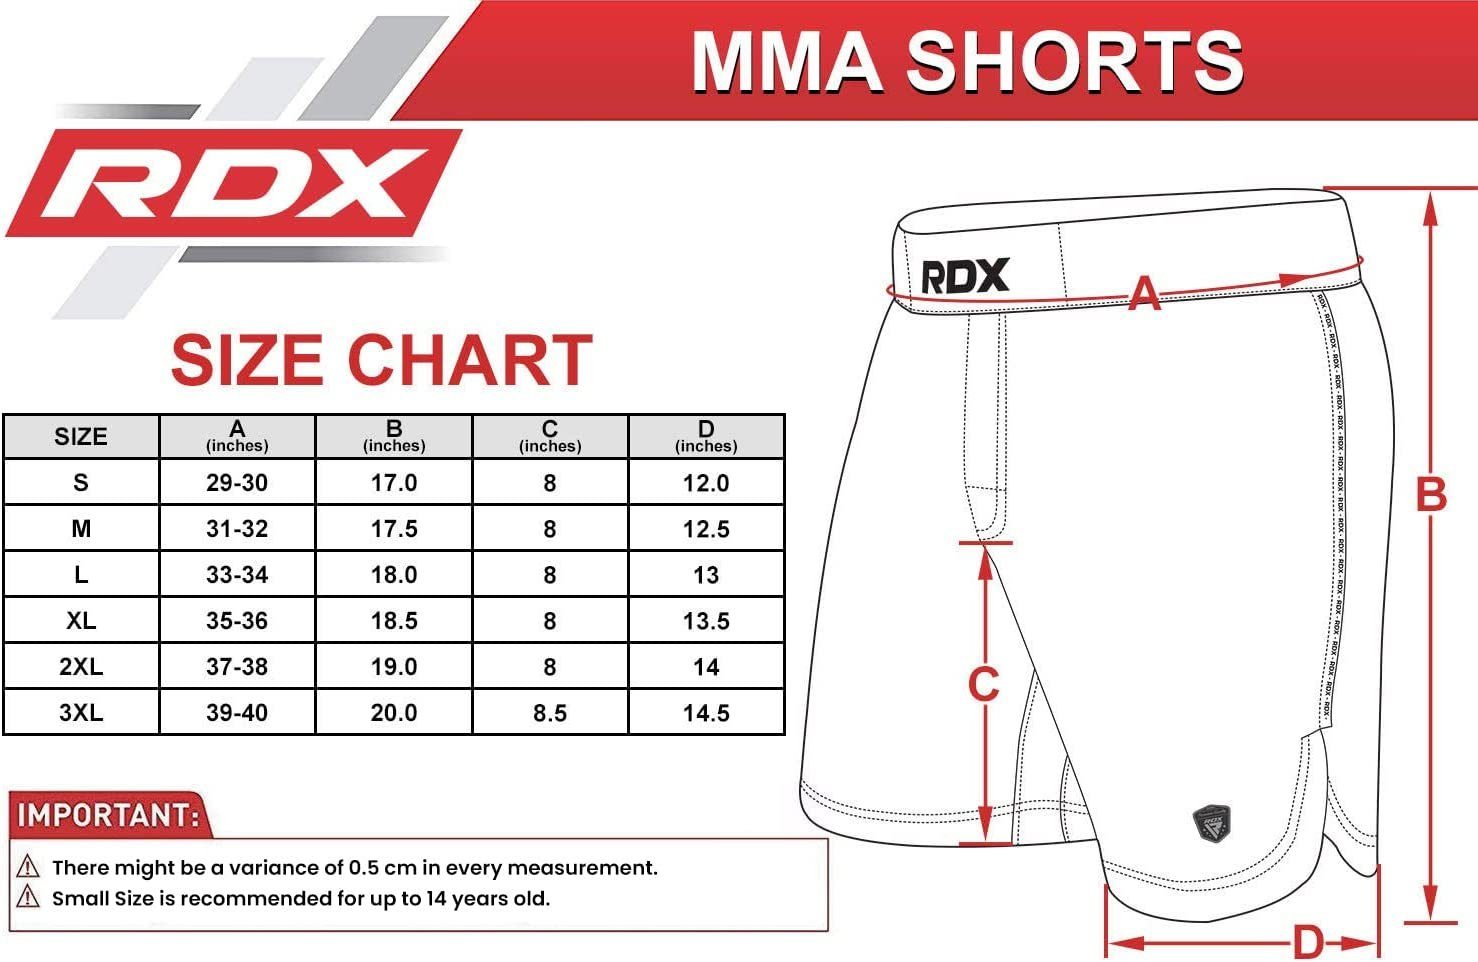 RDX Sports Herren, Shorts Herren MMA kurz, Trainingshose WHITE Kickboxen Trainingsshorts RDX Sporthose